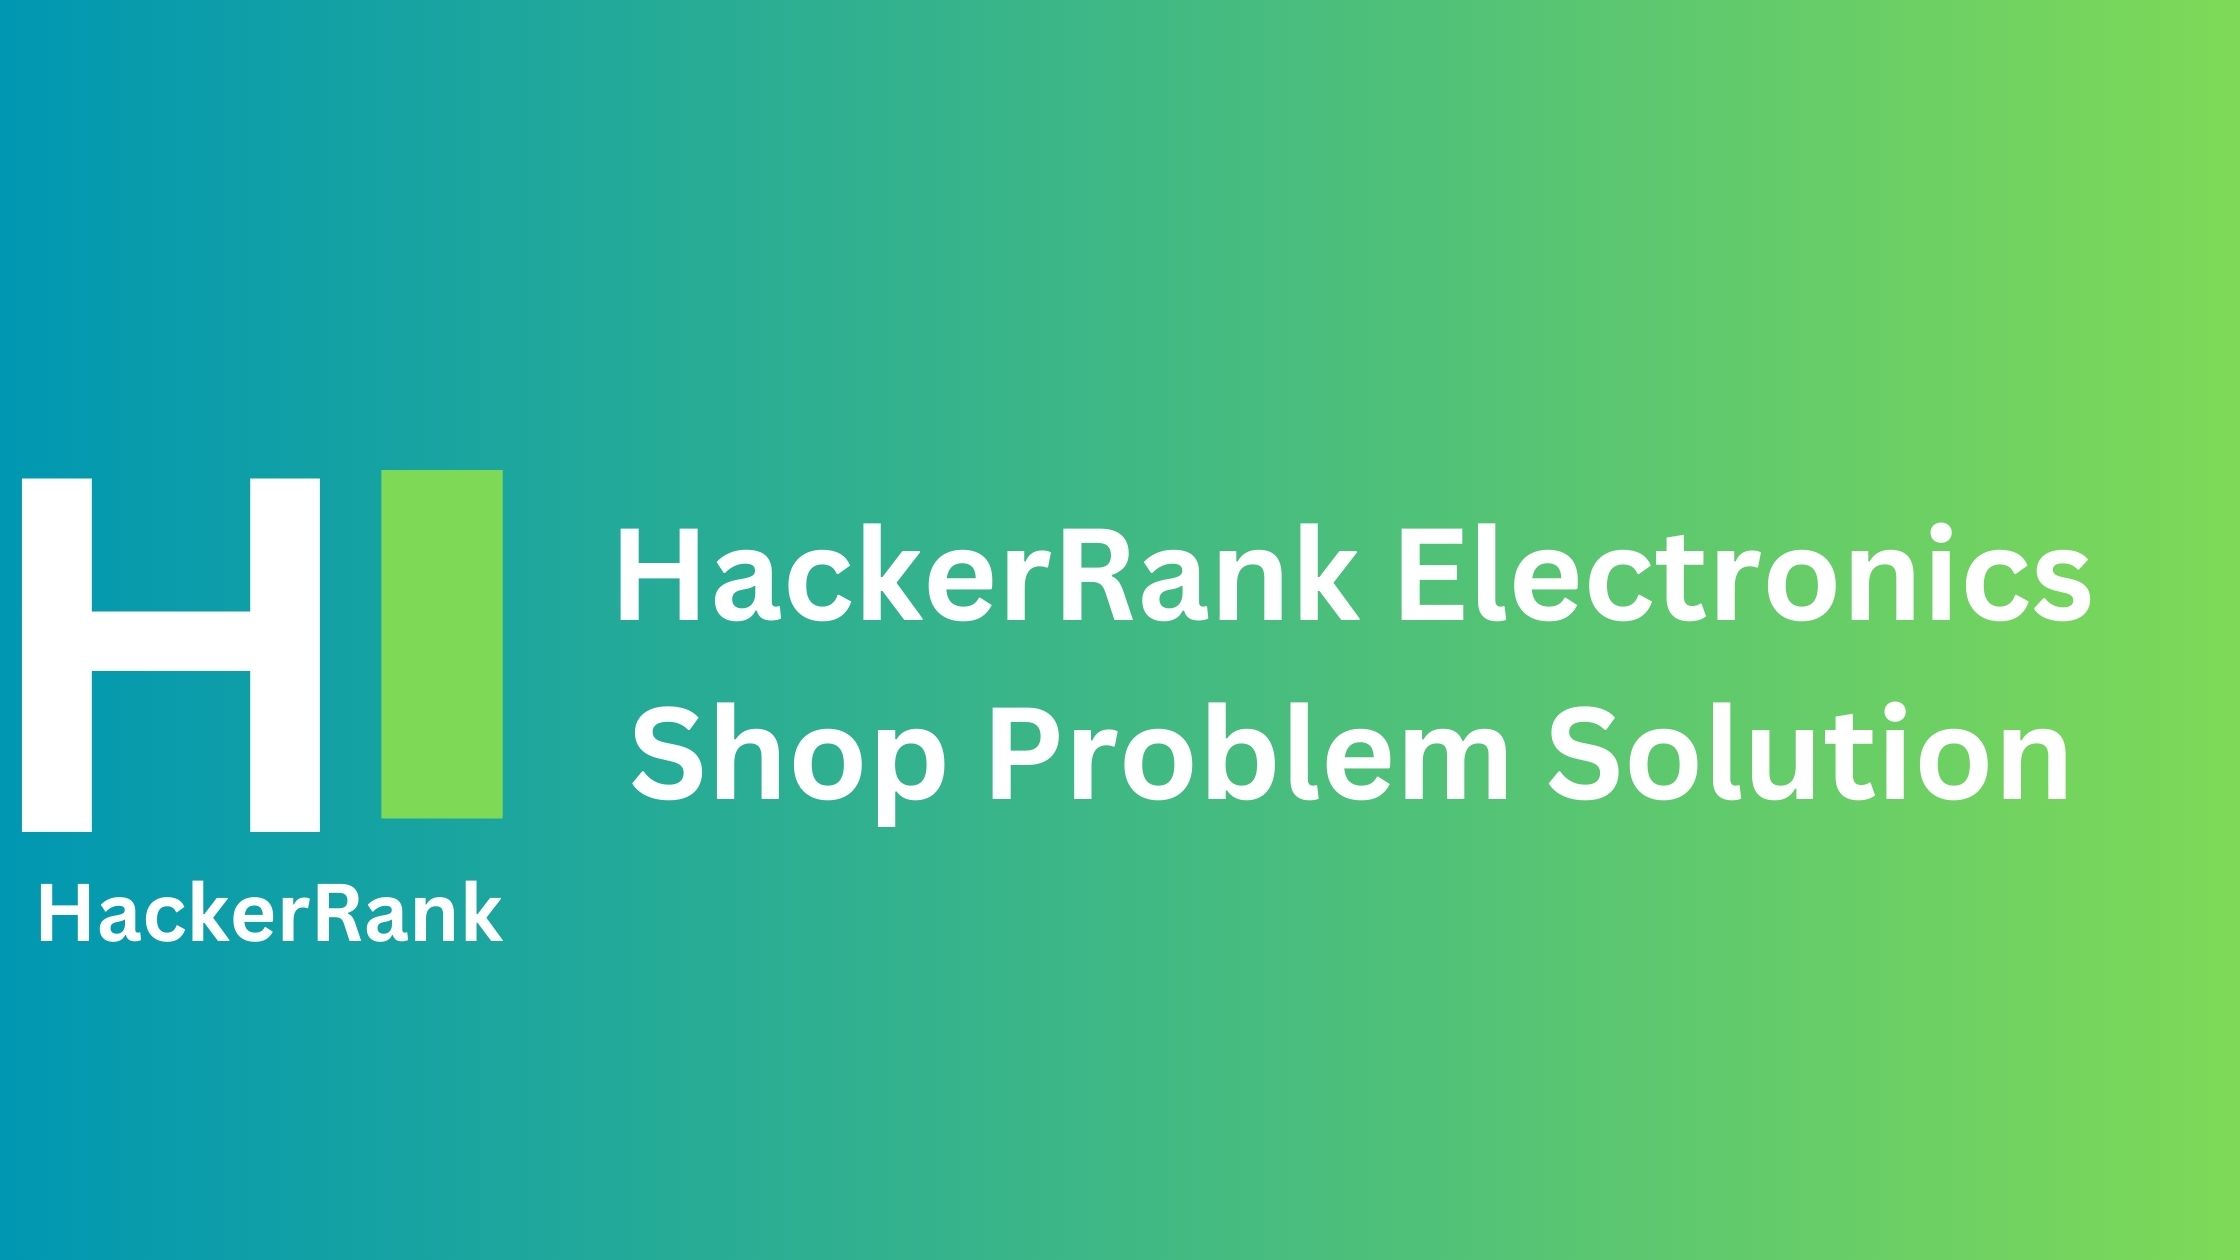 HackerRank Electronics Shop Problem Solution